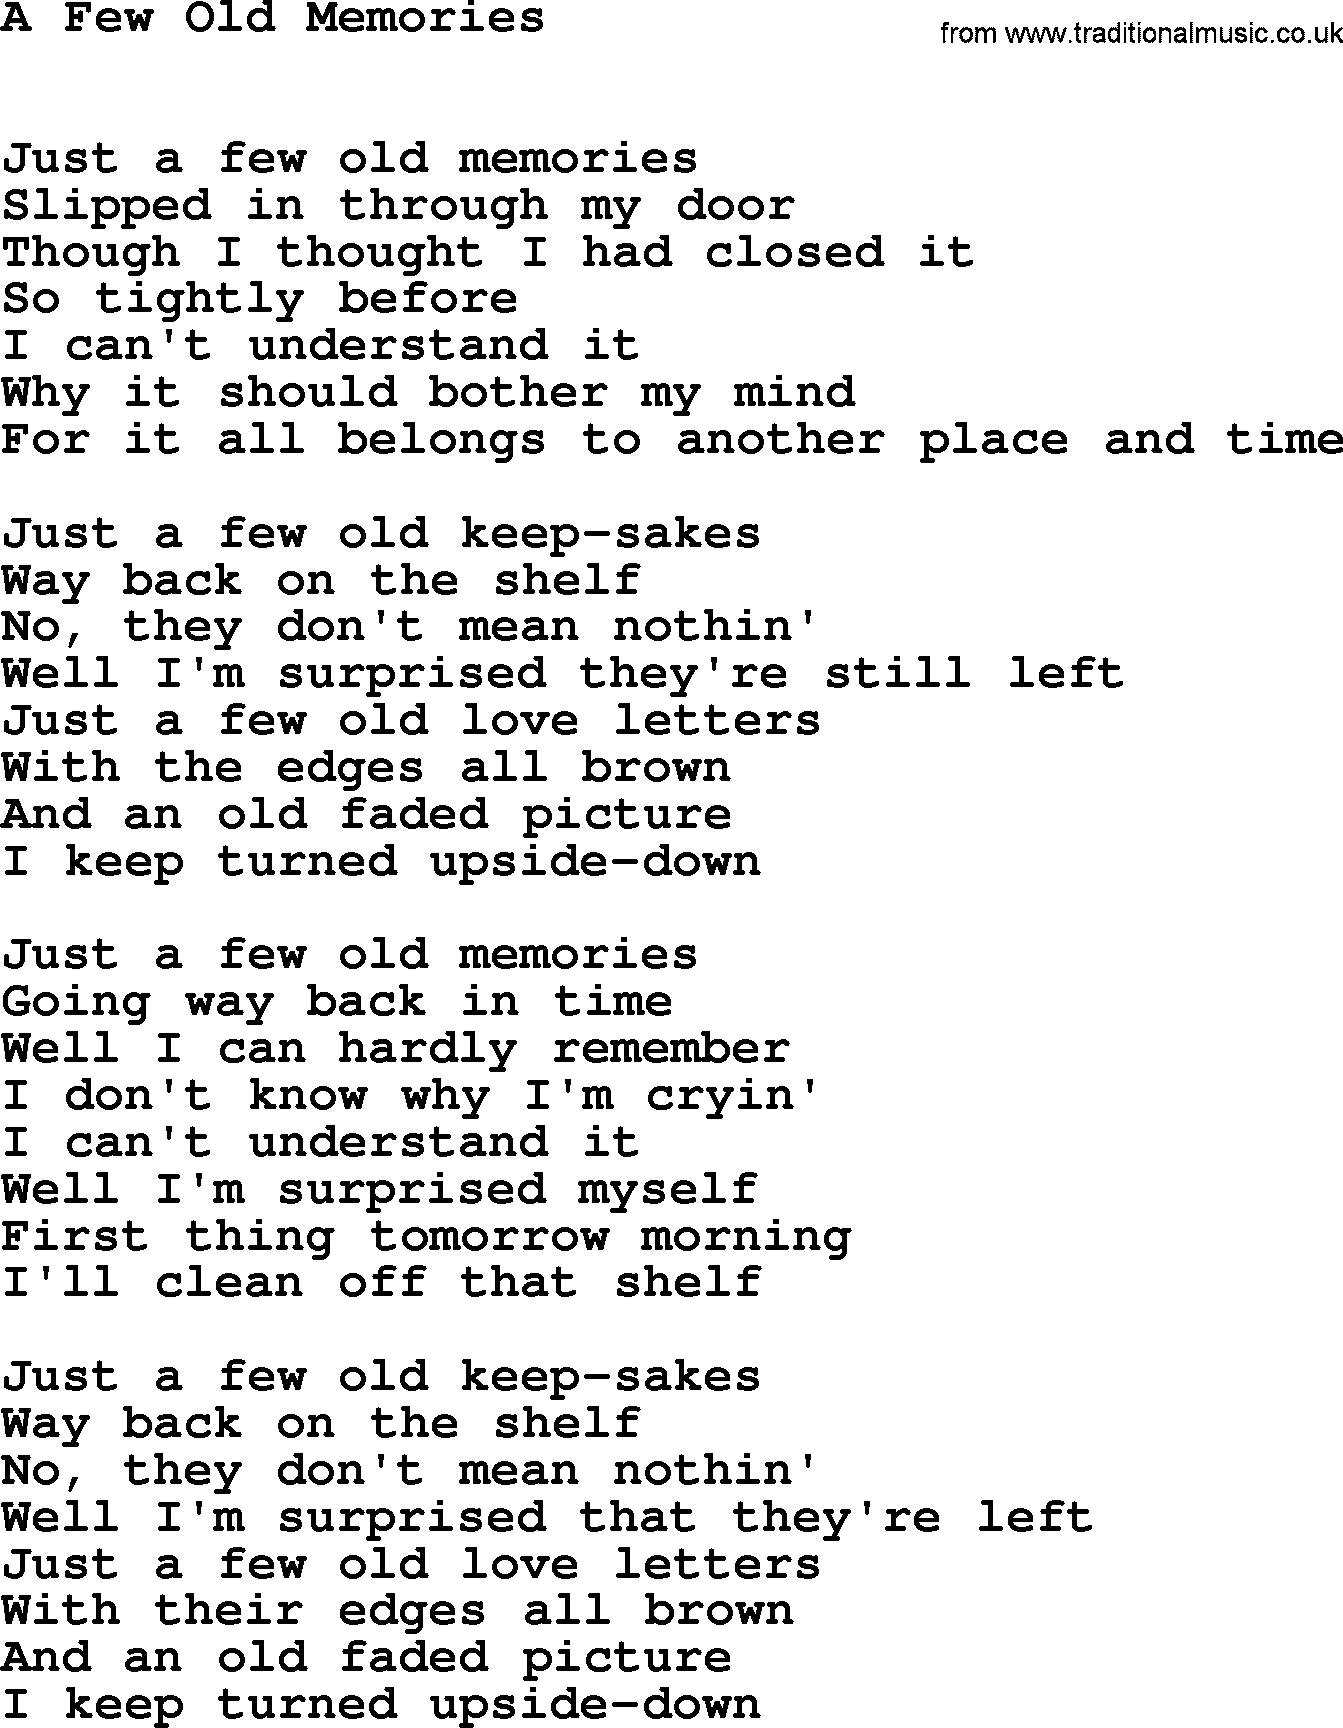 Dolly Parton song A Few Old Memories.txt lyrics